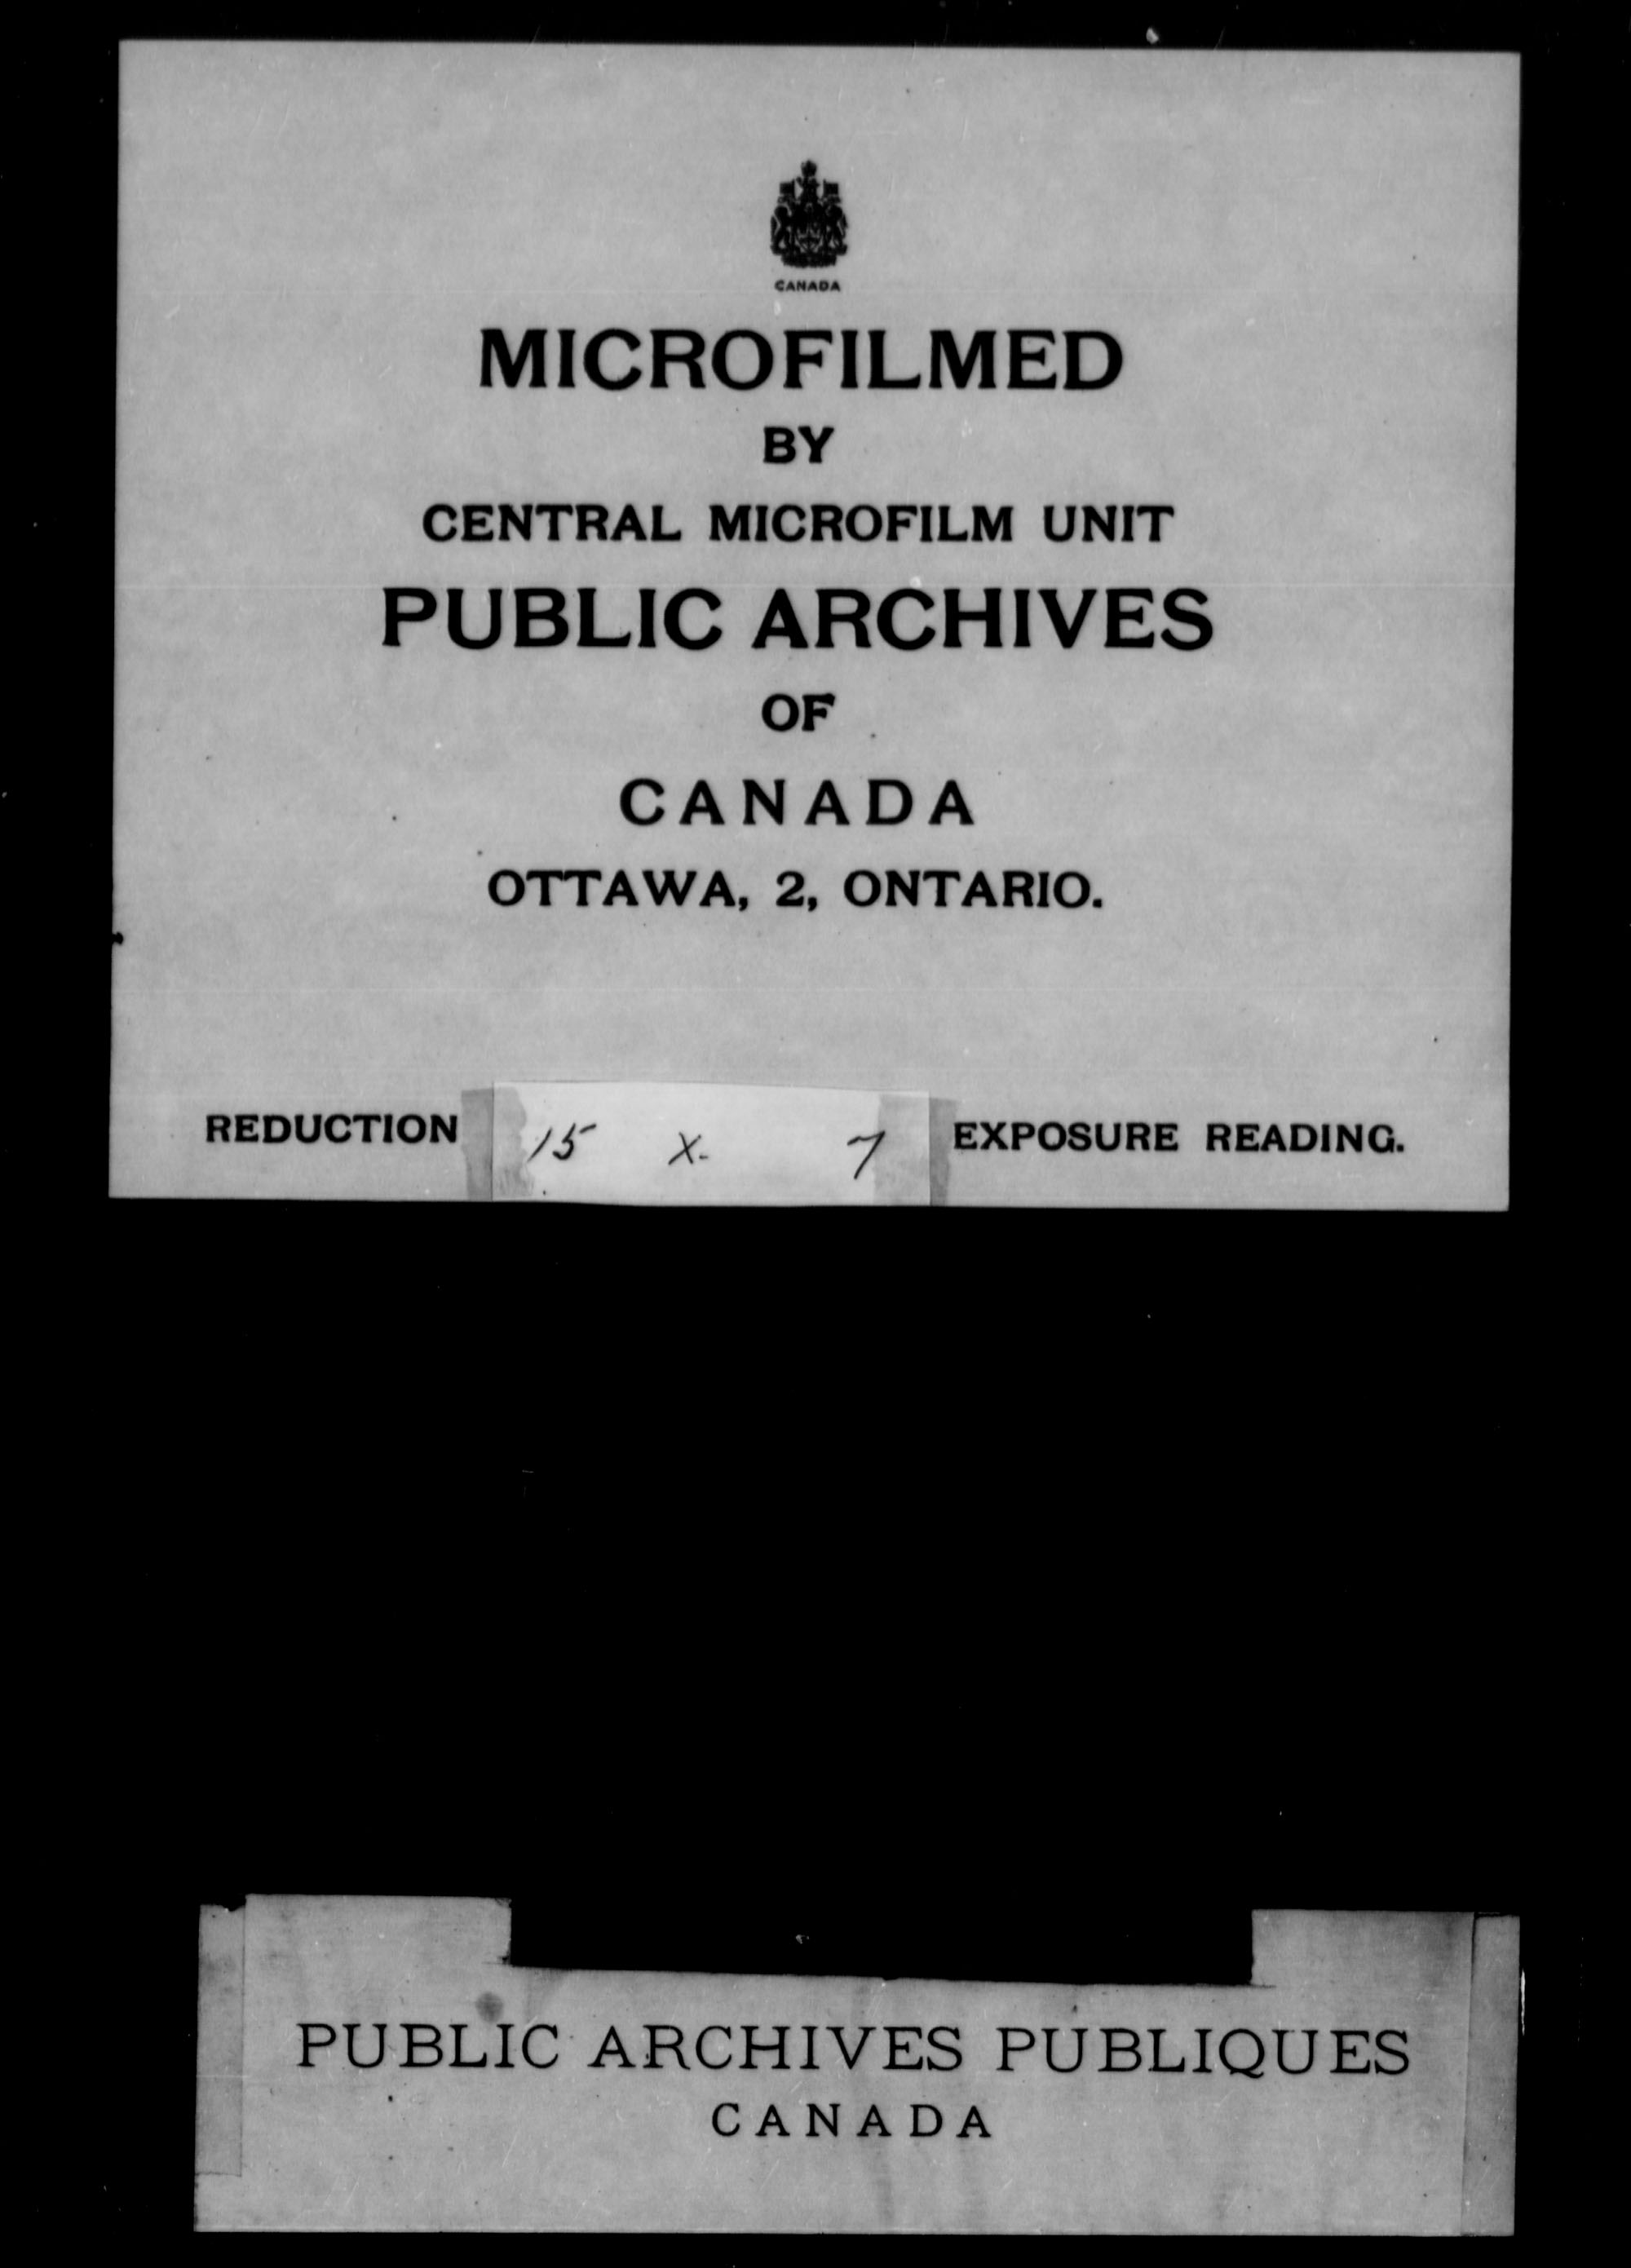 Titre : Demandes de terres du Haut-Canada (1763-1865) - N d'enregistrement Mikan : 205131 - Microforme : c-1728